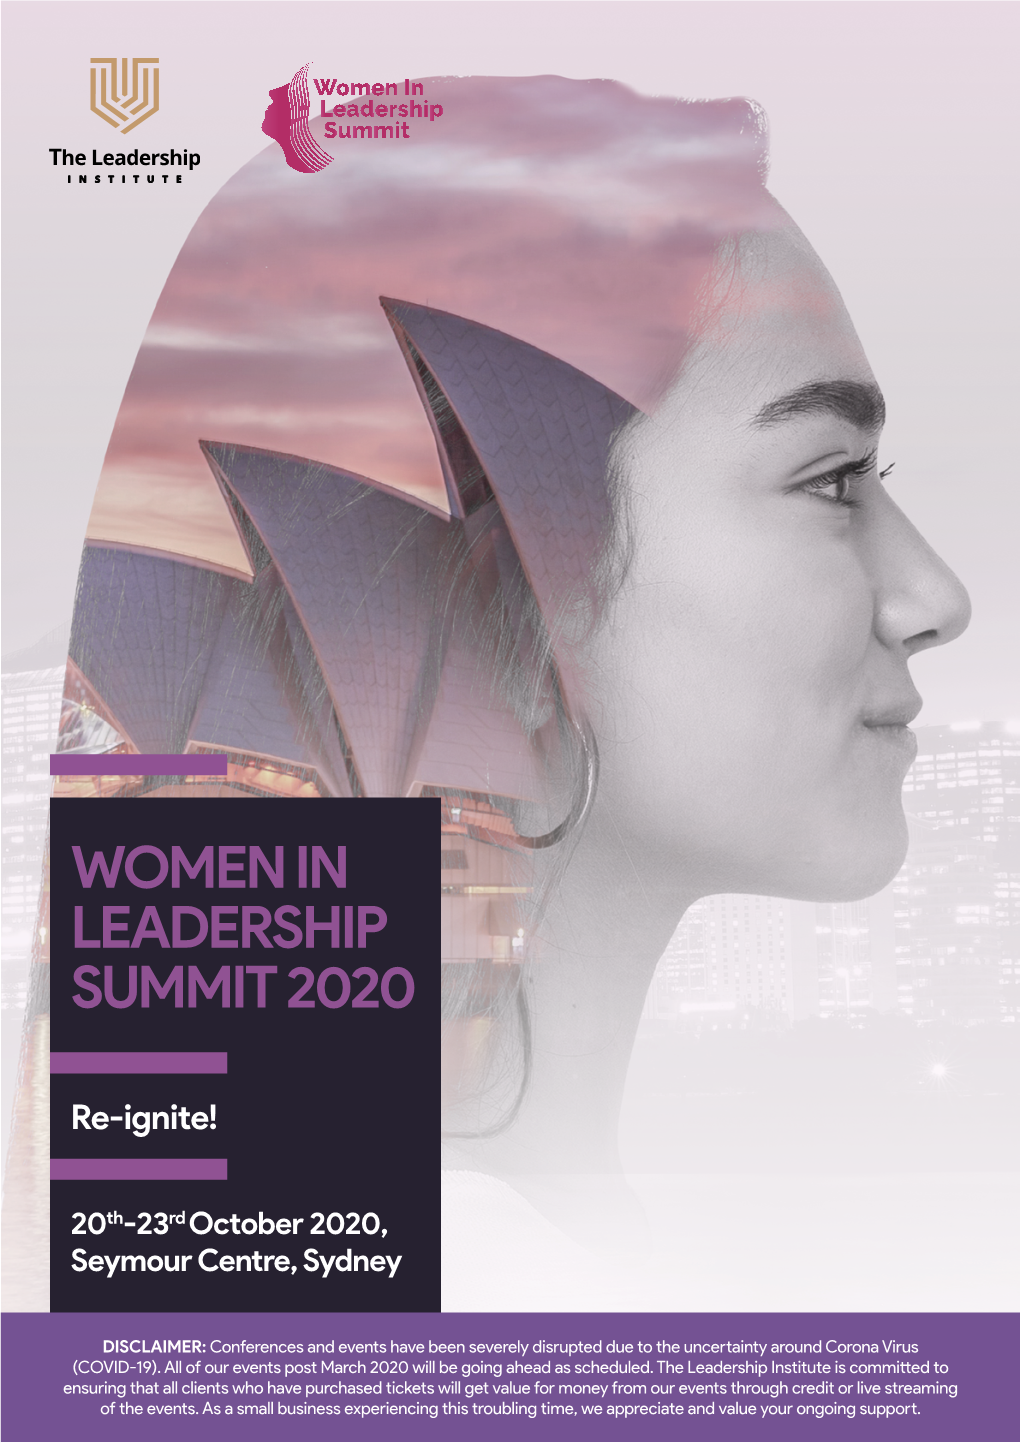 Women in Leadership Summit 2020